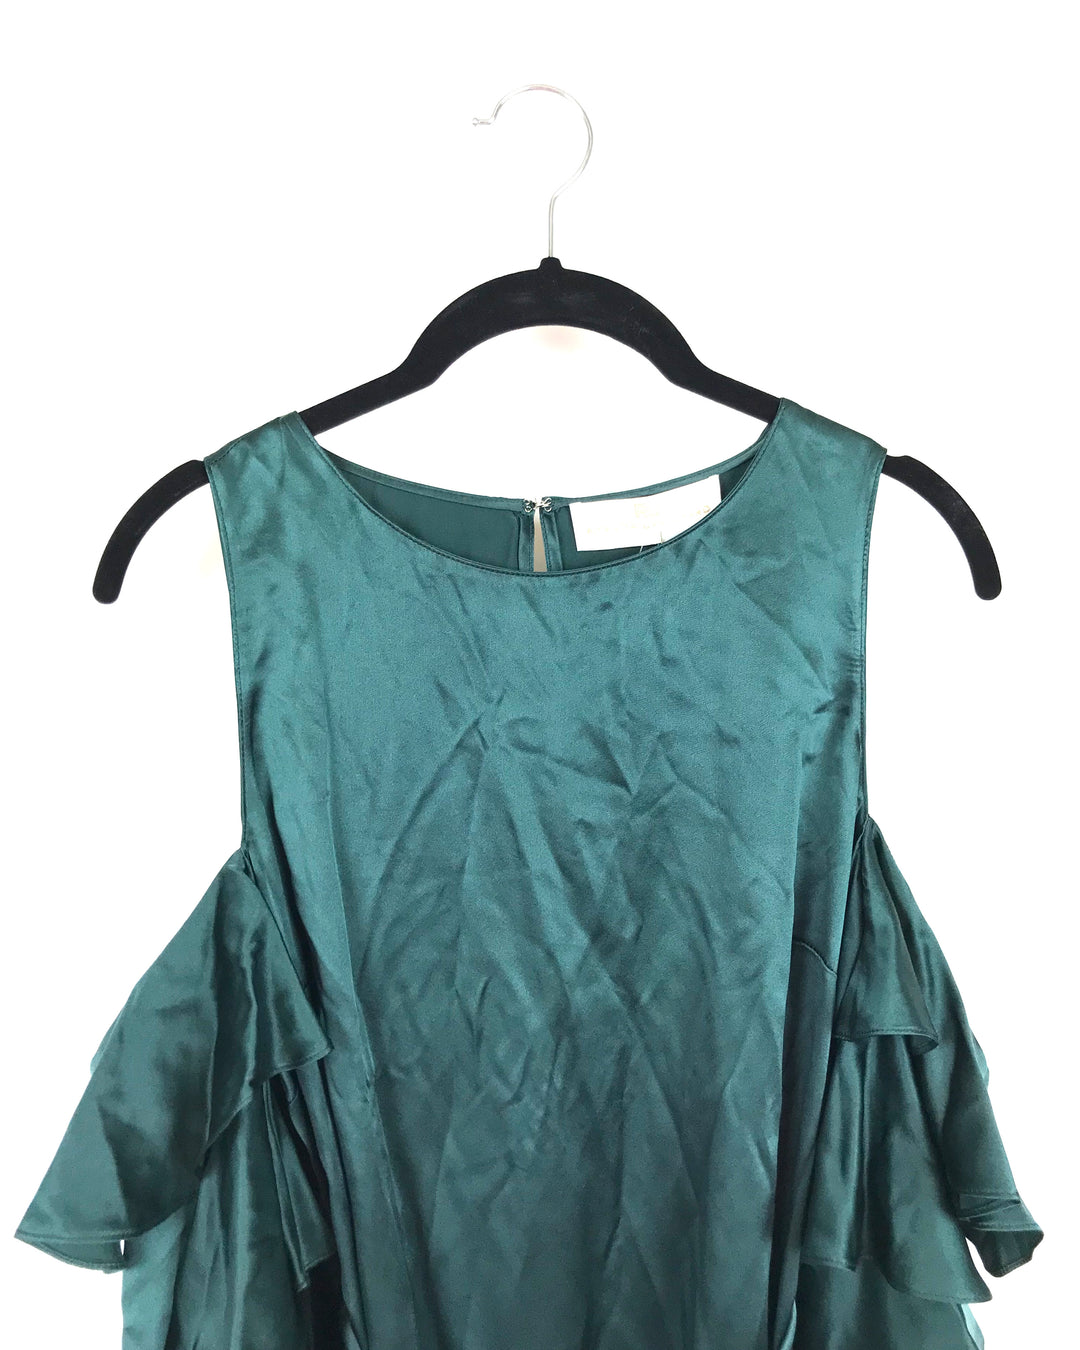 Emerald Green Dress - Small